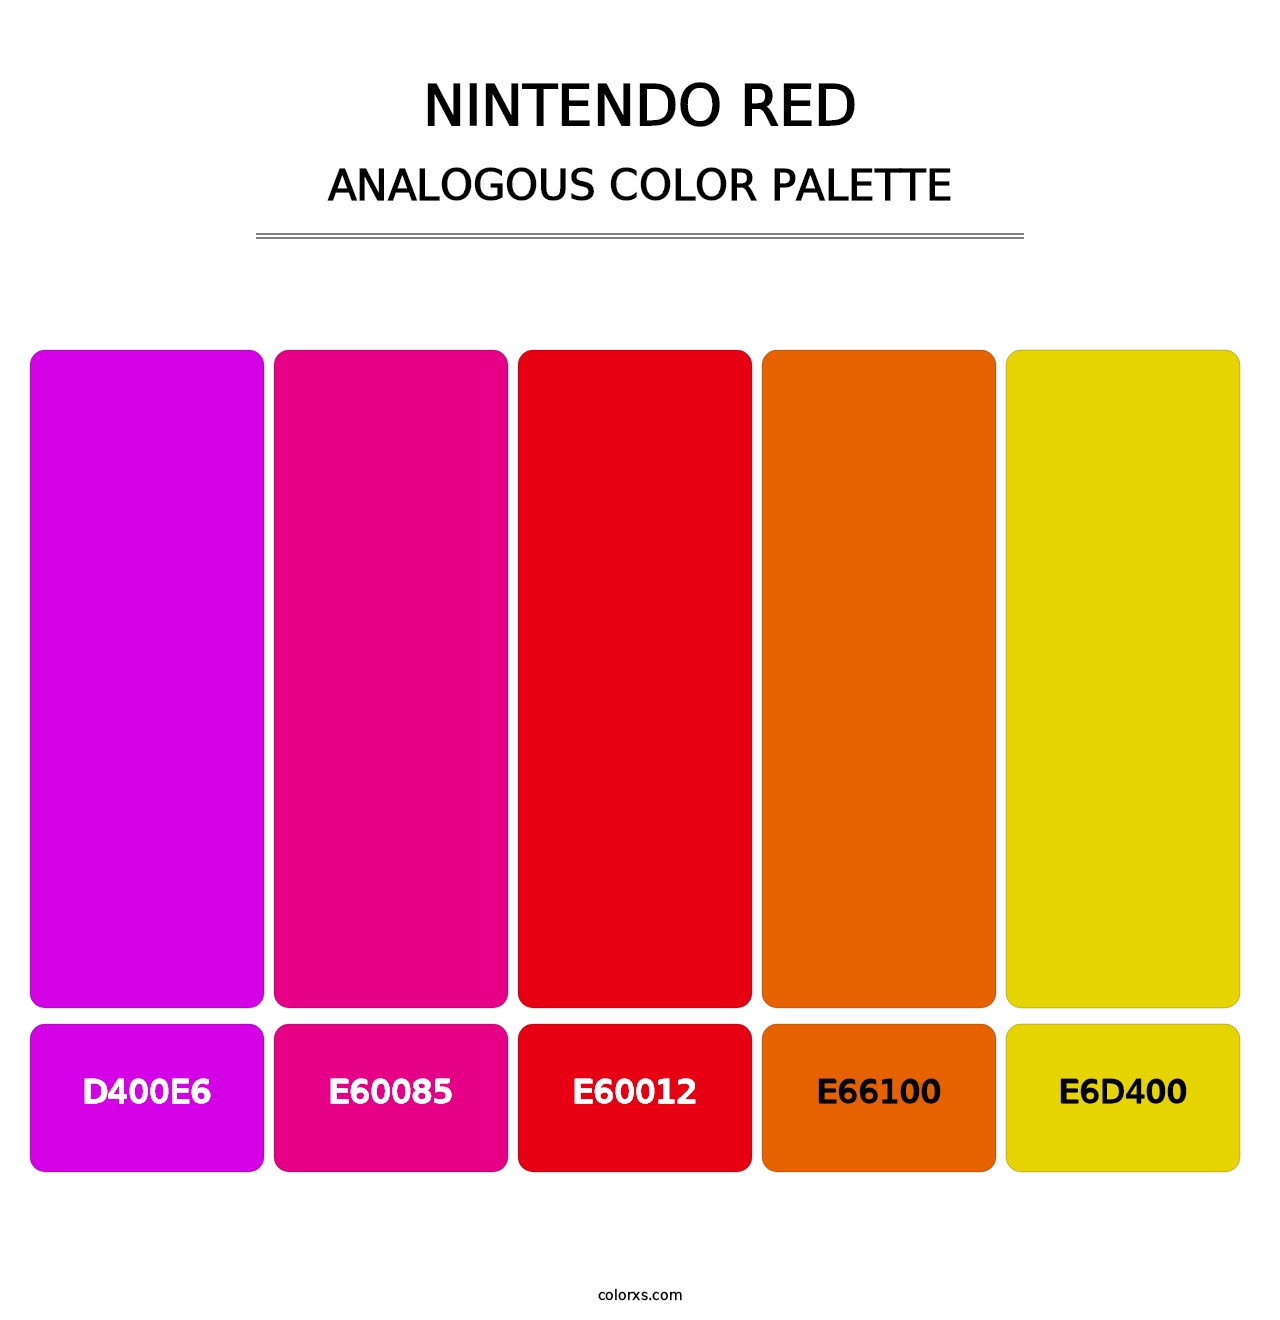 Nintendo Red - Analogous Color Palette